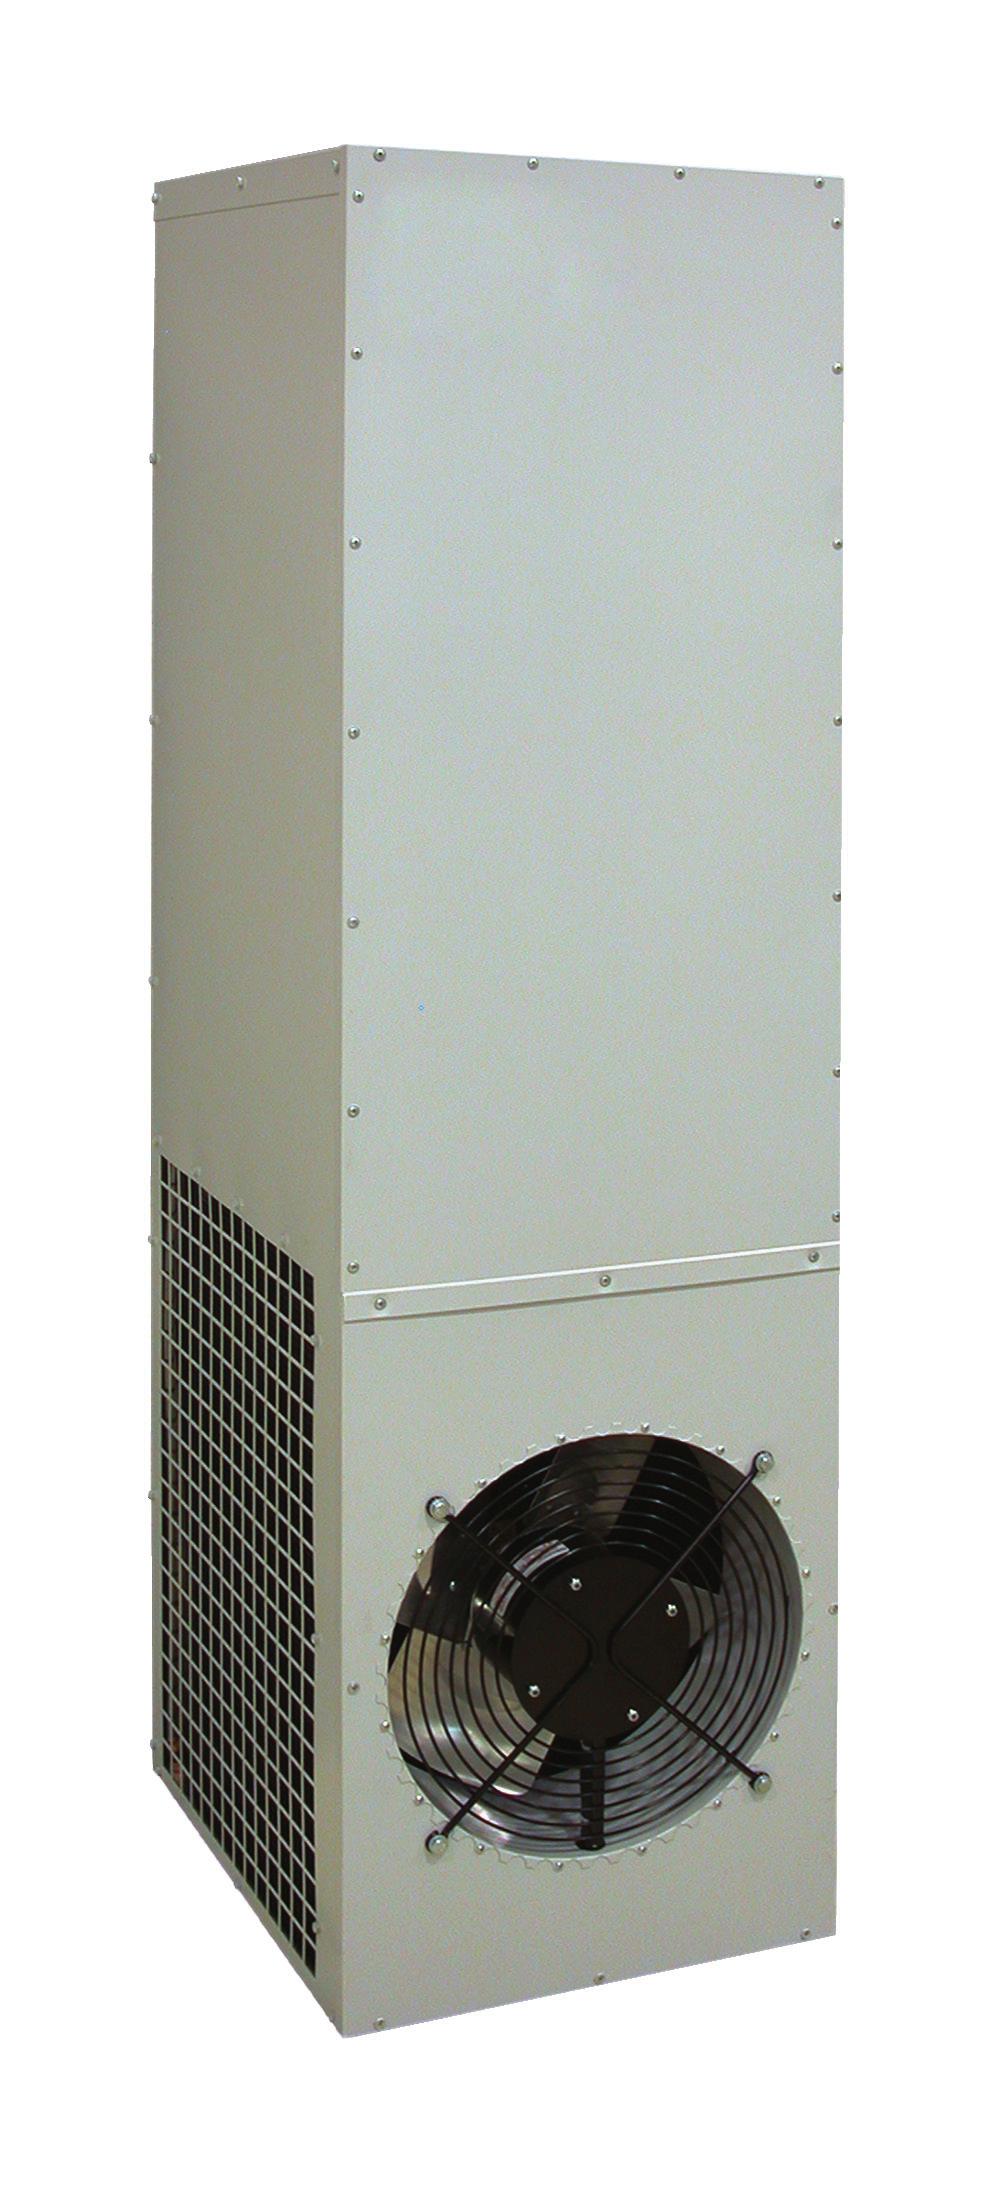 T-SERIES Air Conditioner T62 Model